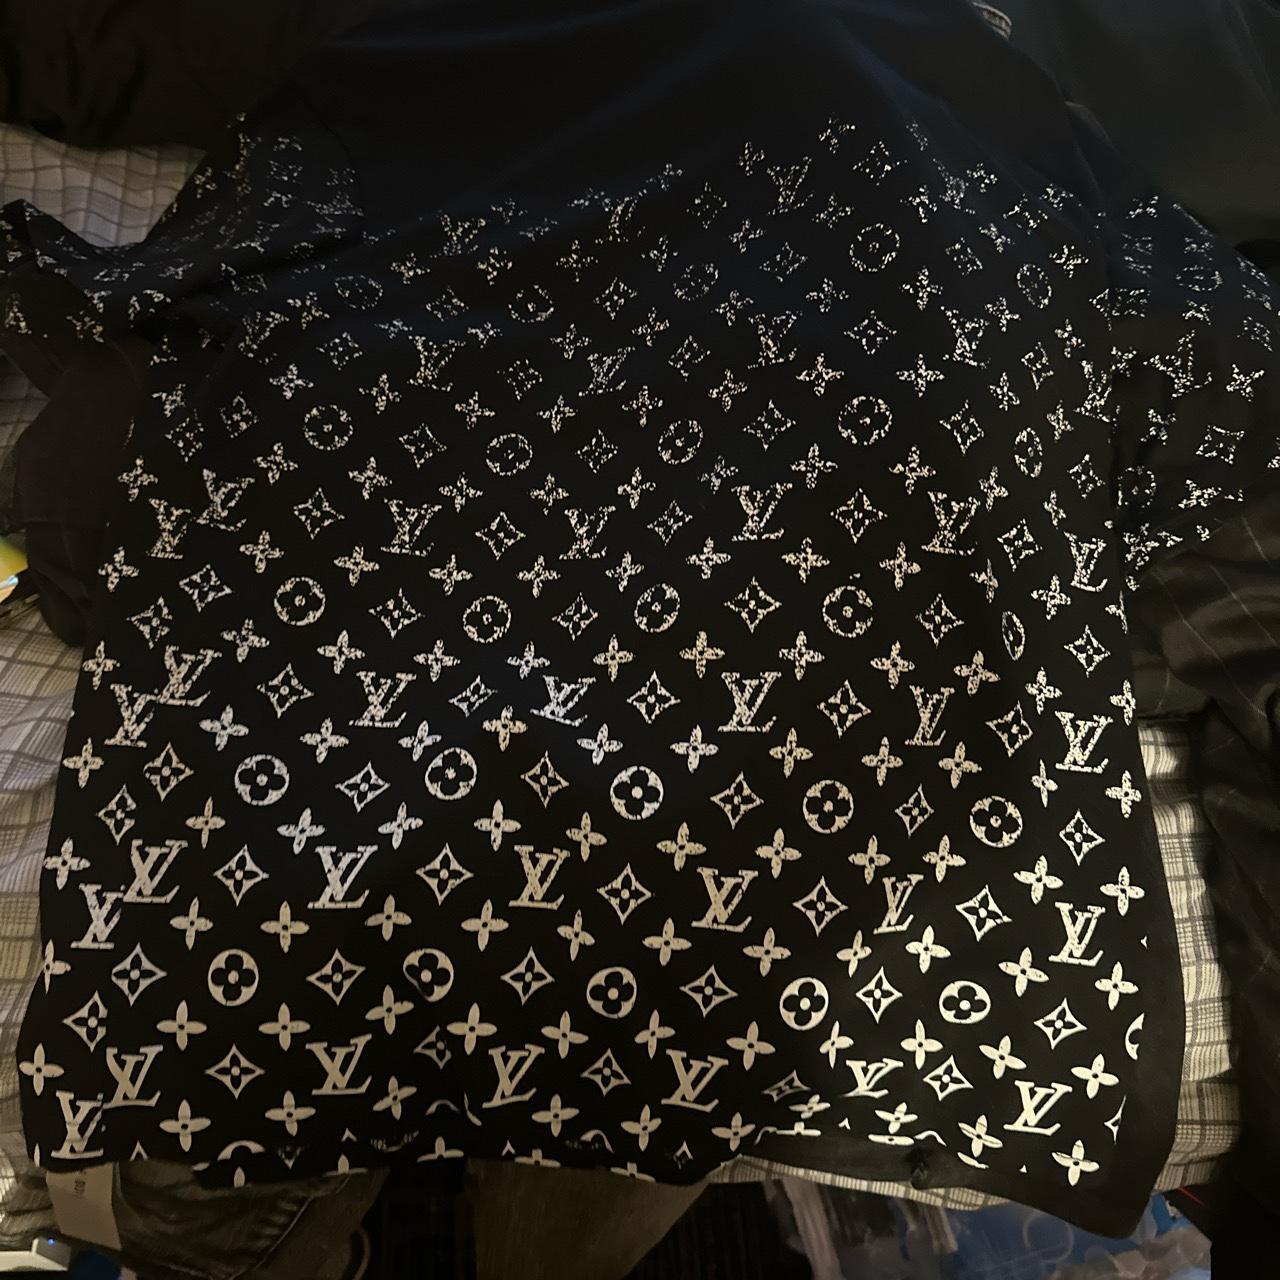 Louis Vuitton Black Monogram Denim Baseball Shirt